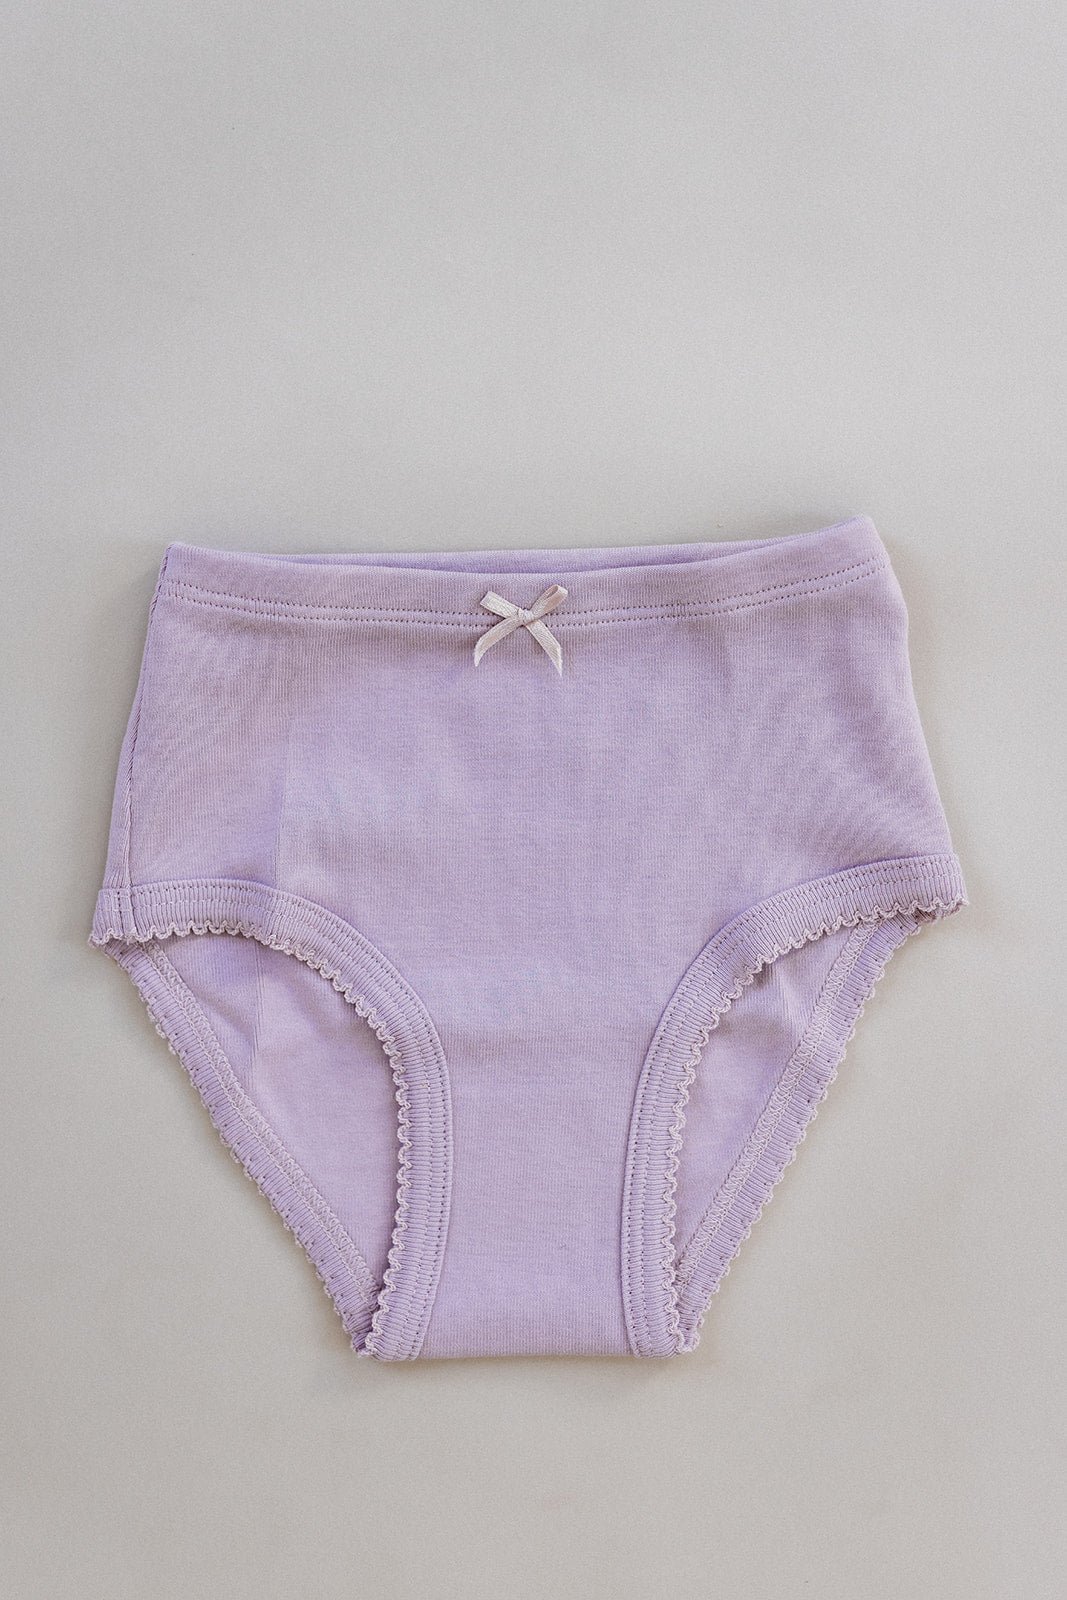 Vintage Underwear Toddler Girls Pink Puppies Panties 100% Cotton